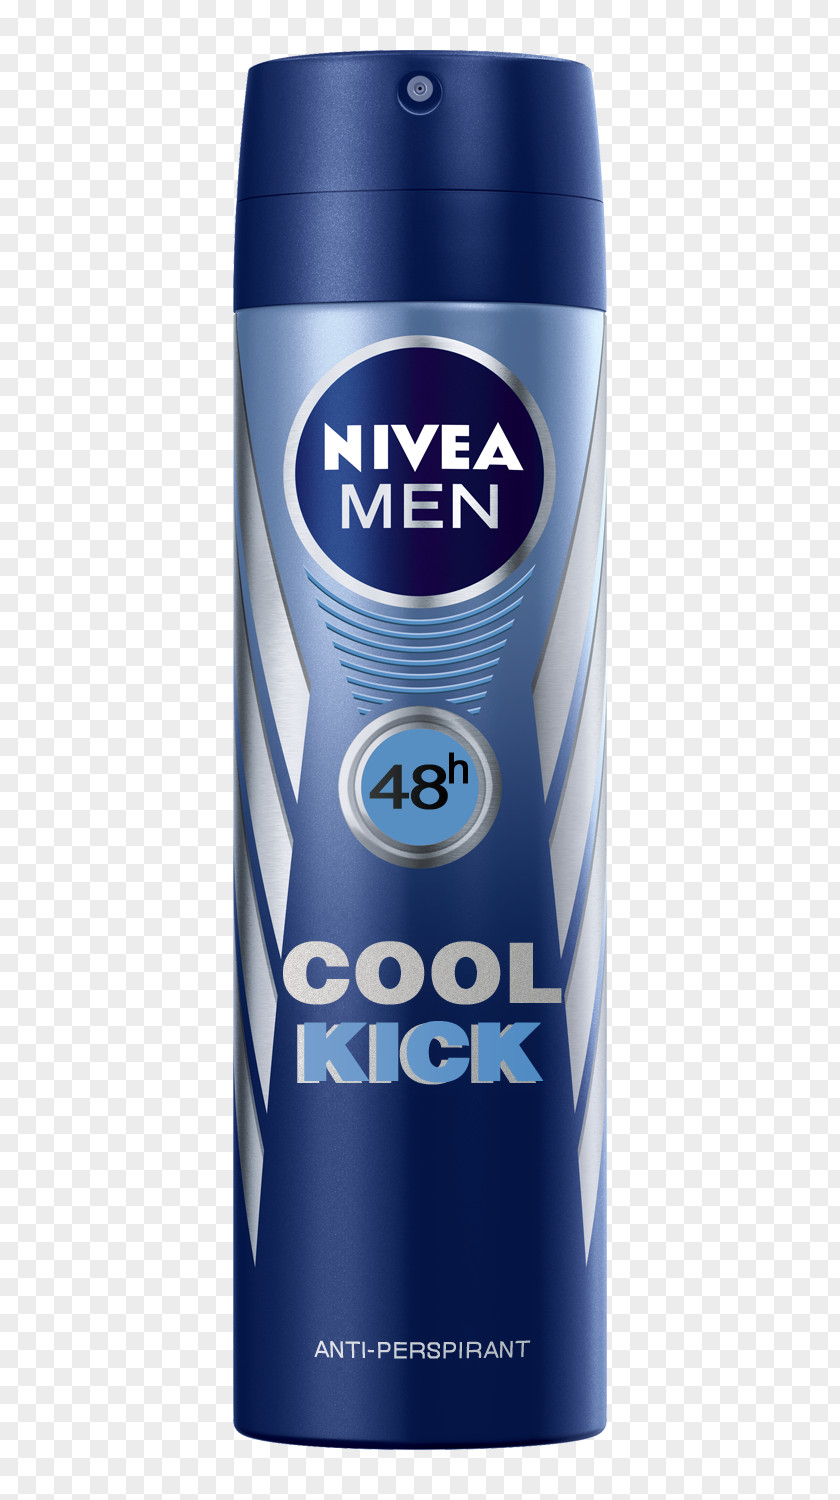 Cool Guy NIVEA Men Deo Vapo 200 Ml MEN Kick Deodorant Spray Product Design PNG